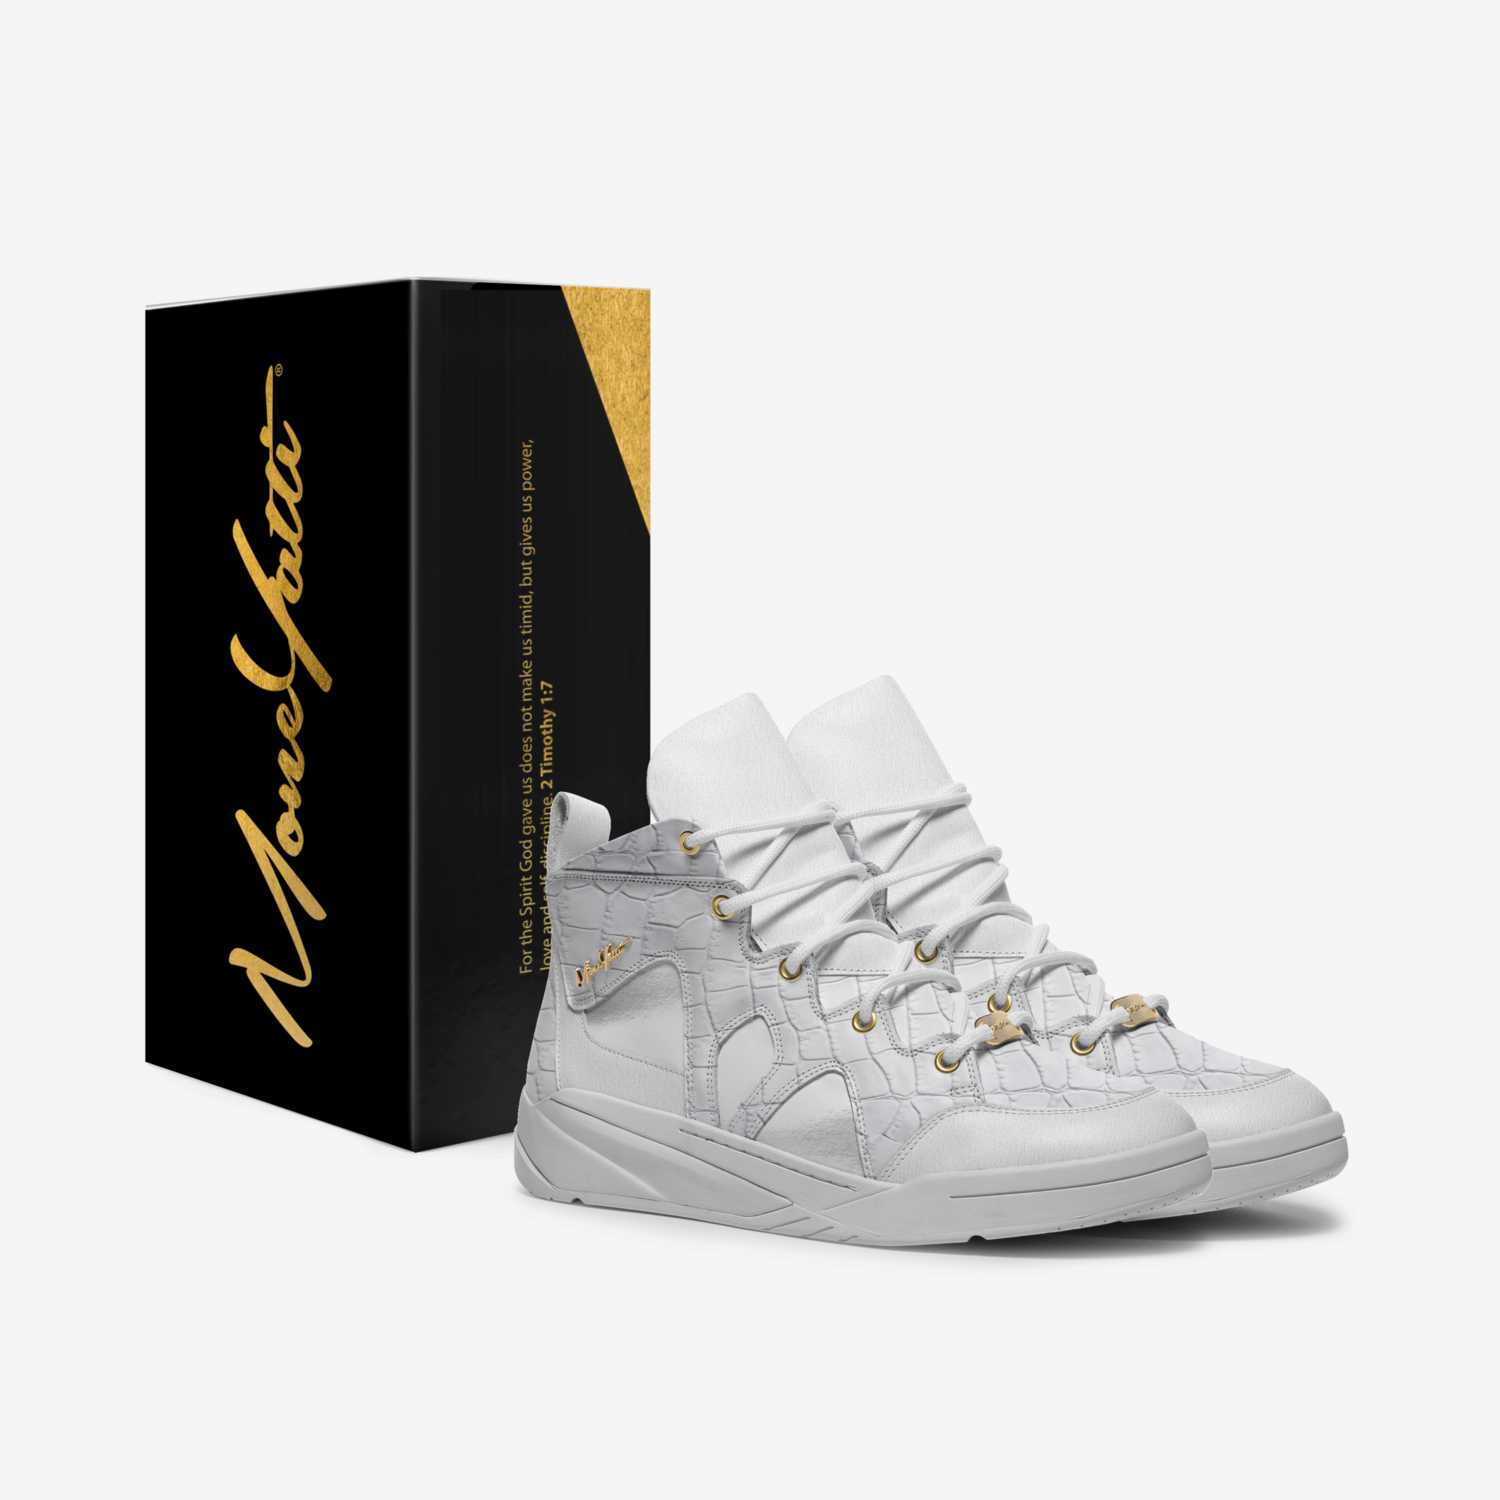 MONEYATTI TAKEOFF 011 custom made in Italy shoes by Moneyatti Brand | Box view